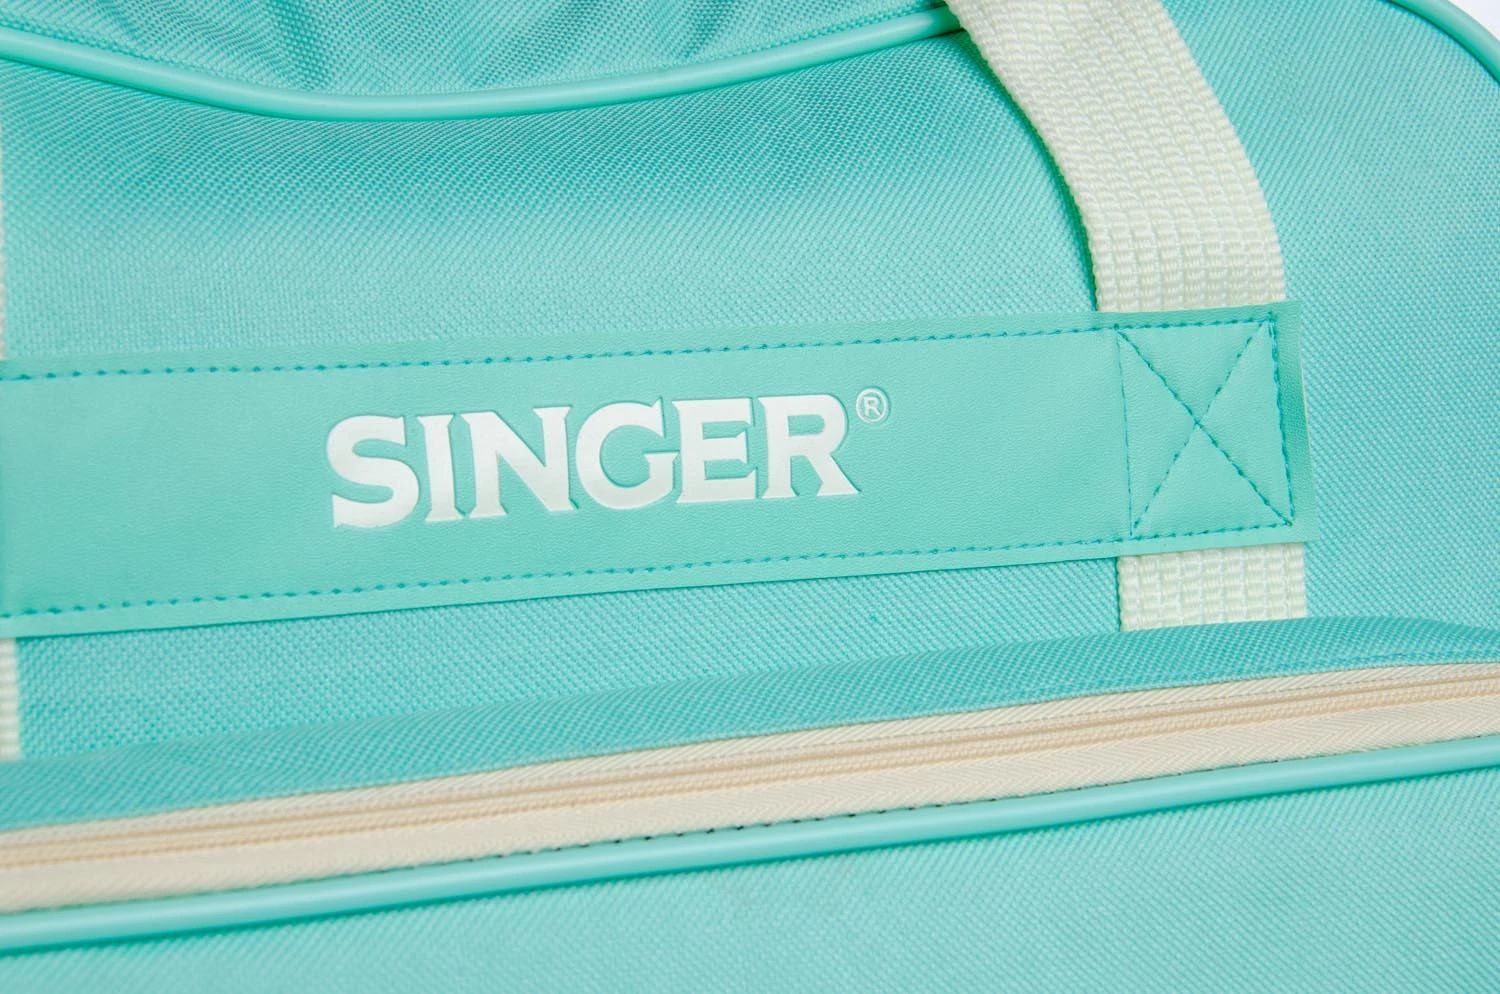 SINGER Universal Canvas Tote Bag - Teal